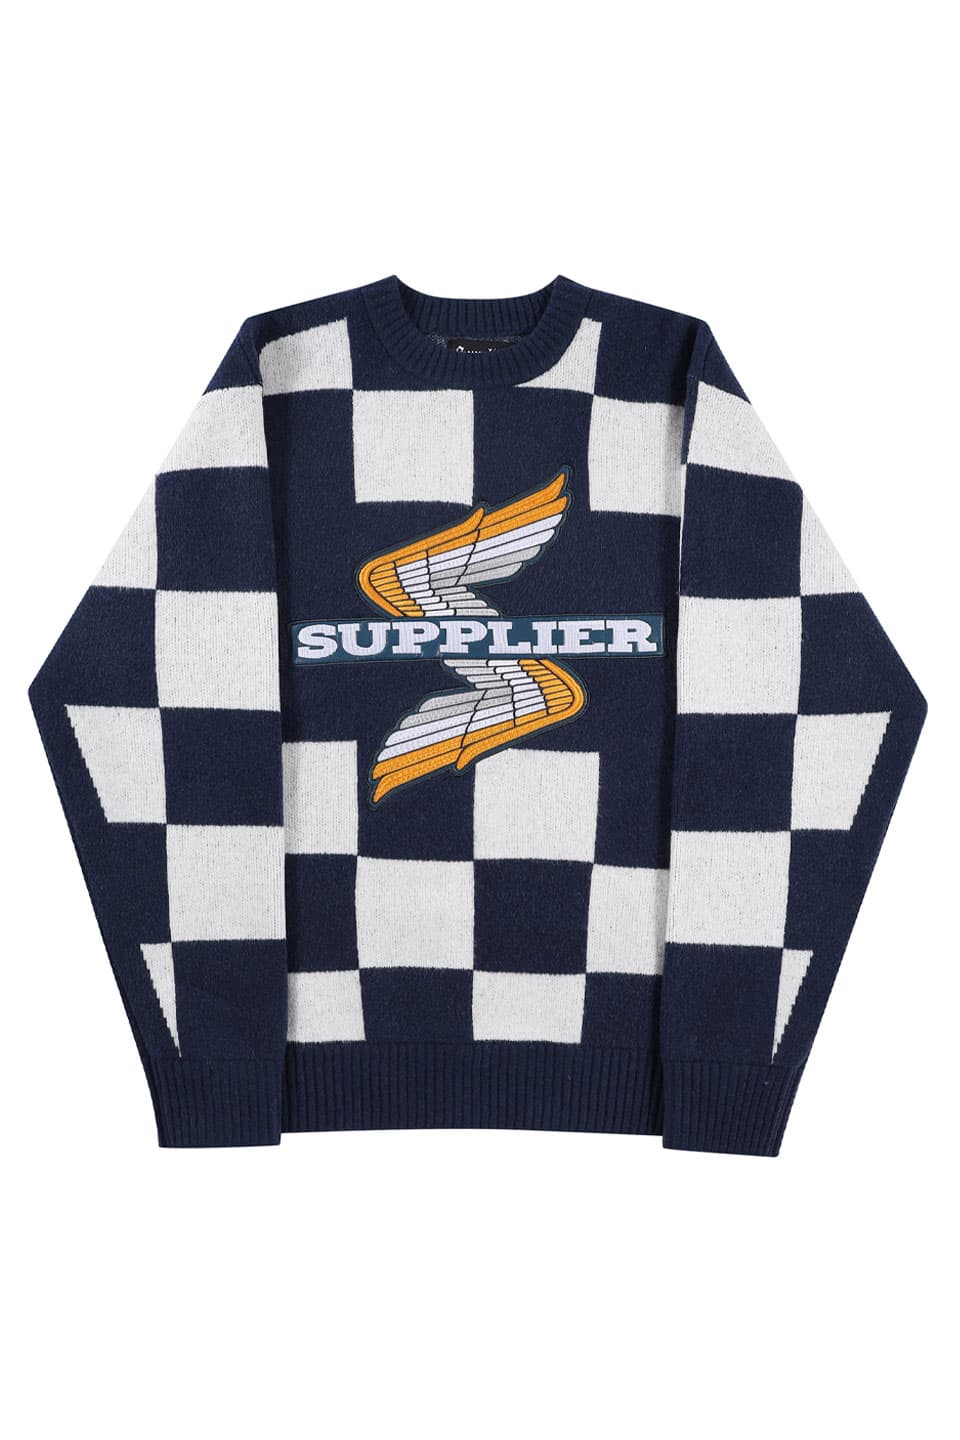 SUPPLIER｜Racing Knit サプライヤー レーシング ロゴ ニット セーター